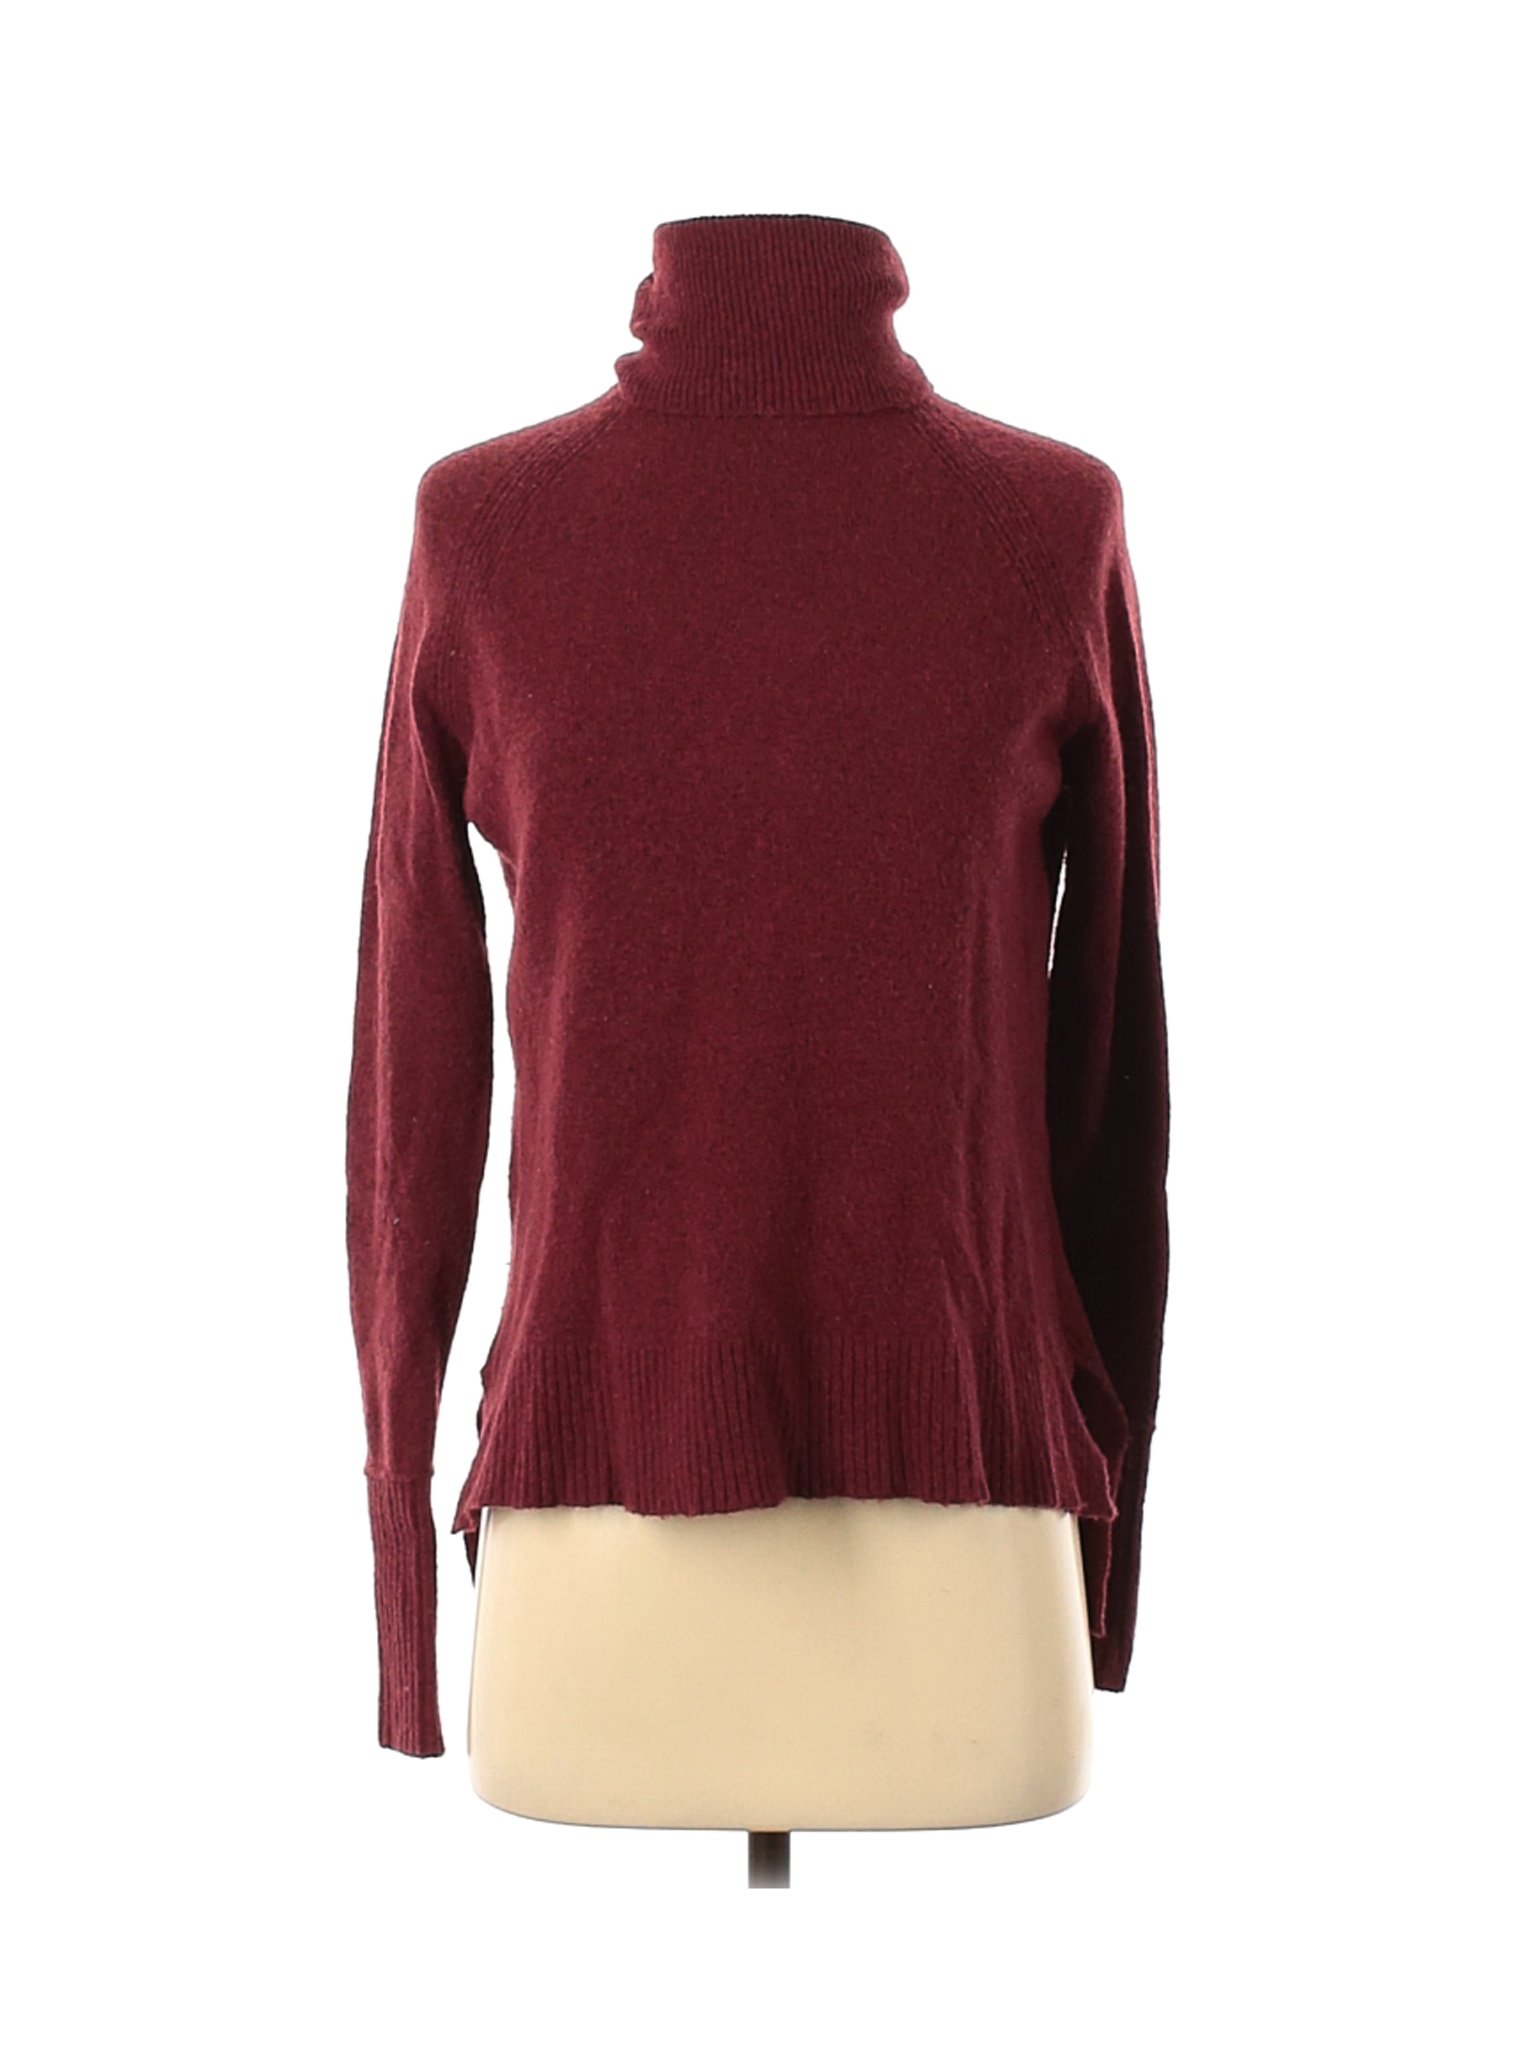 J.Crew Women Red Turtleneck Sweater XS | eBay